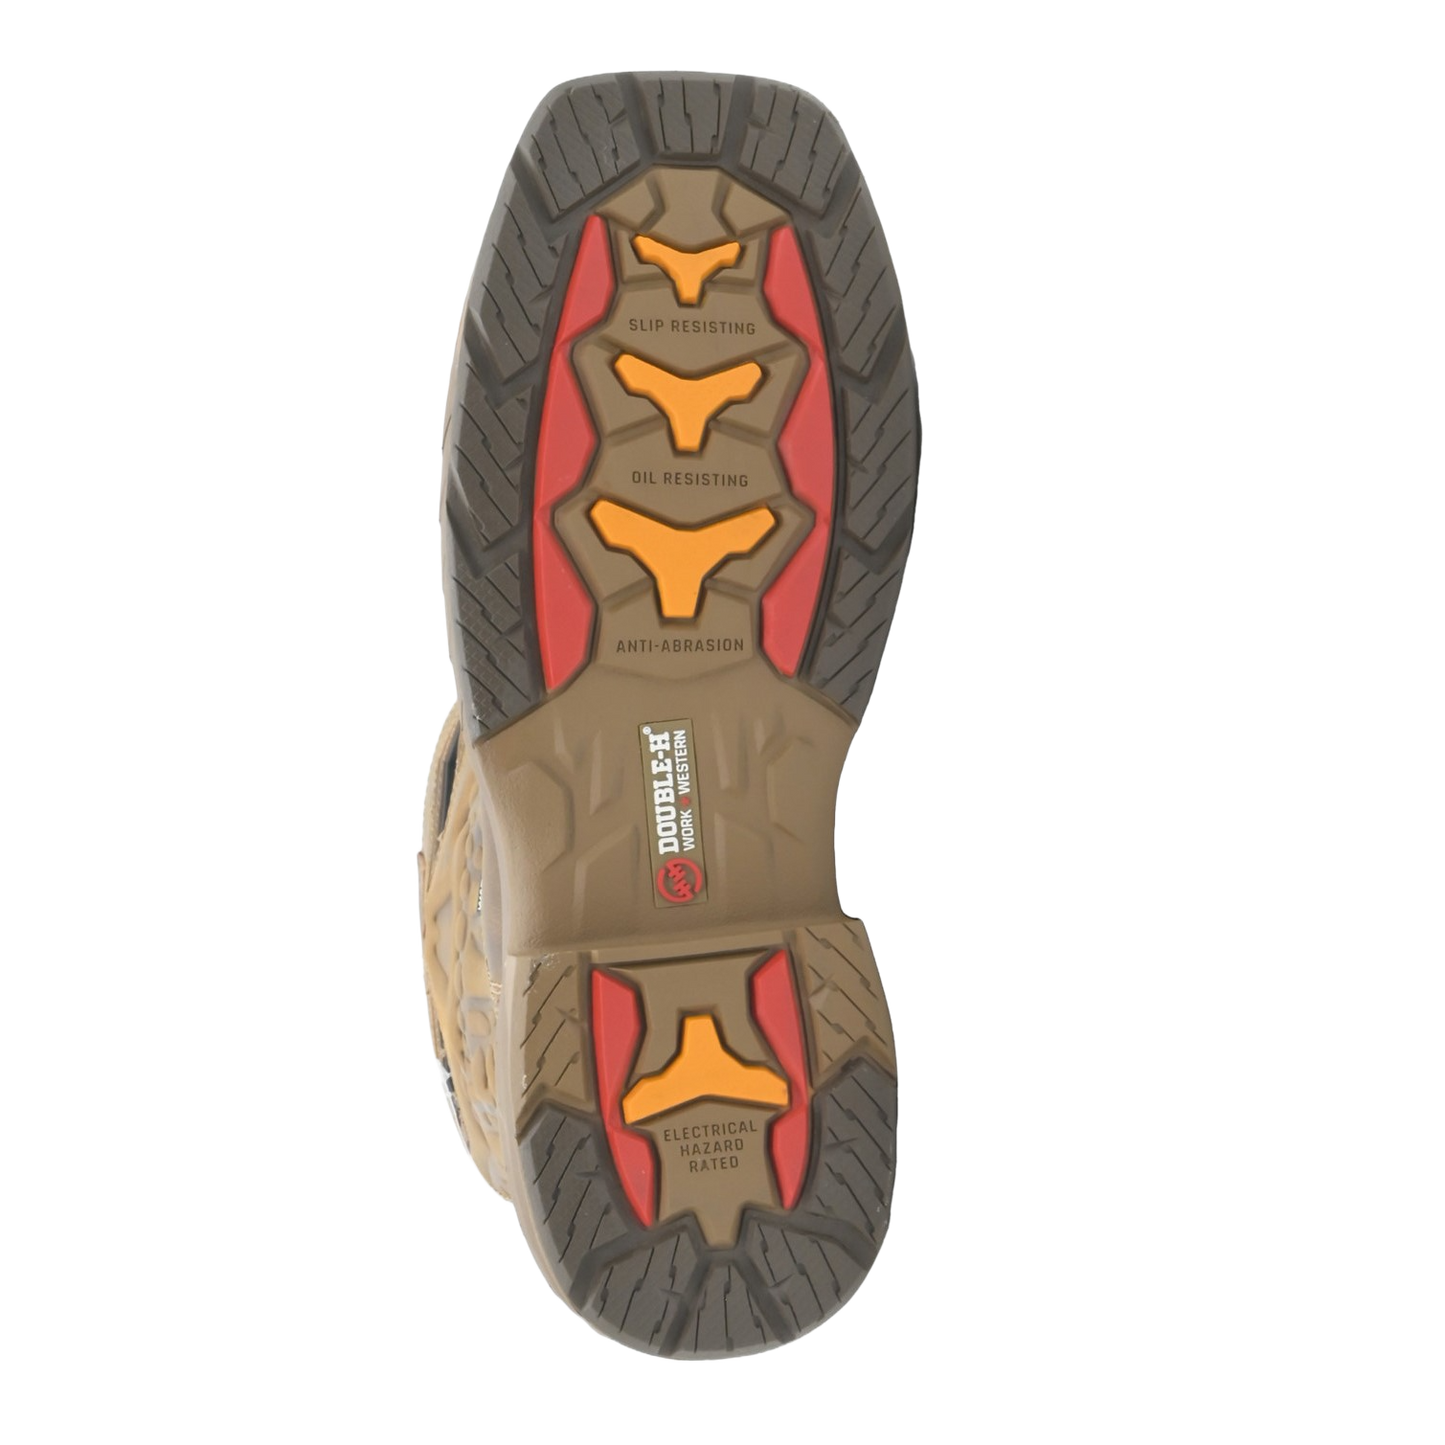 Double H Men's Lycan Thomas Brown Waterproof Composite Toe Boots DH5398